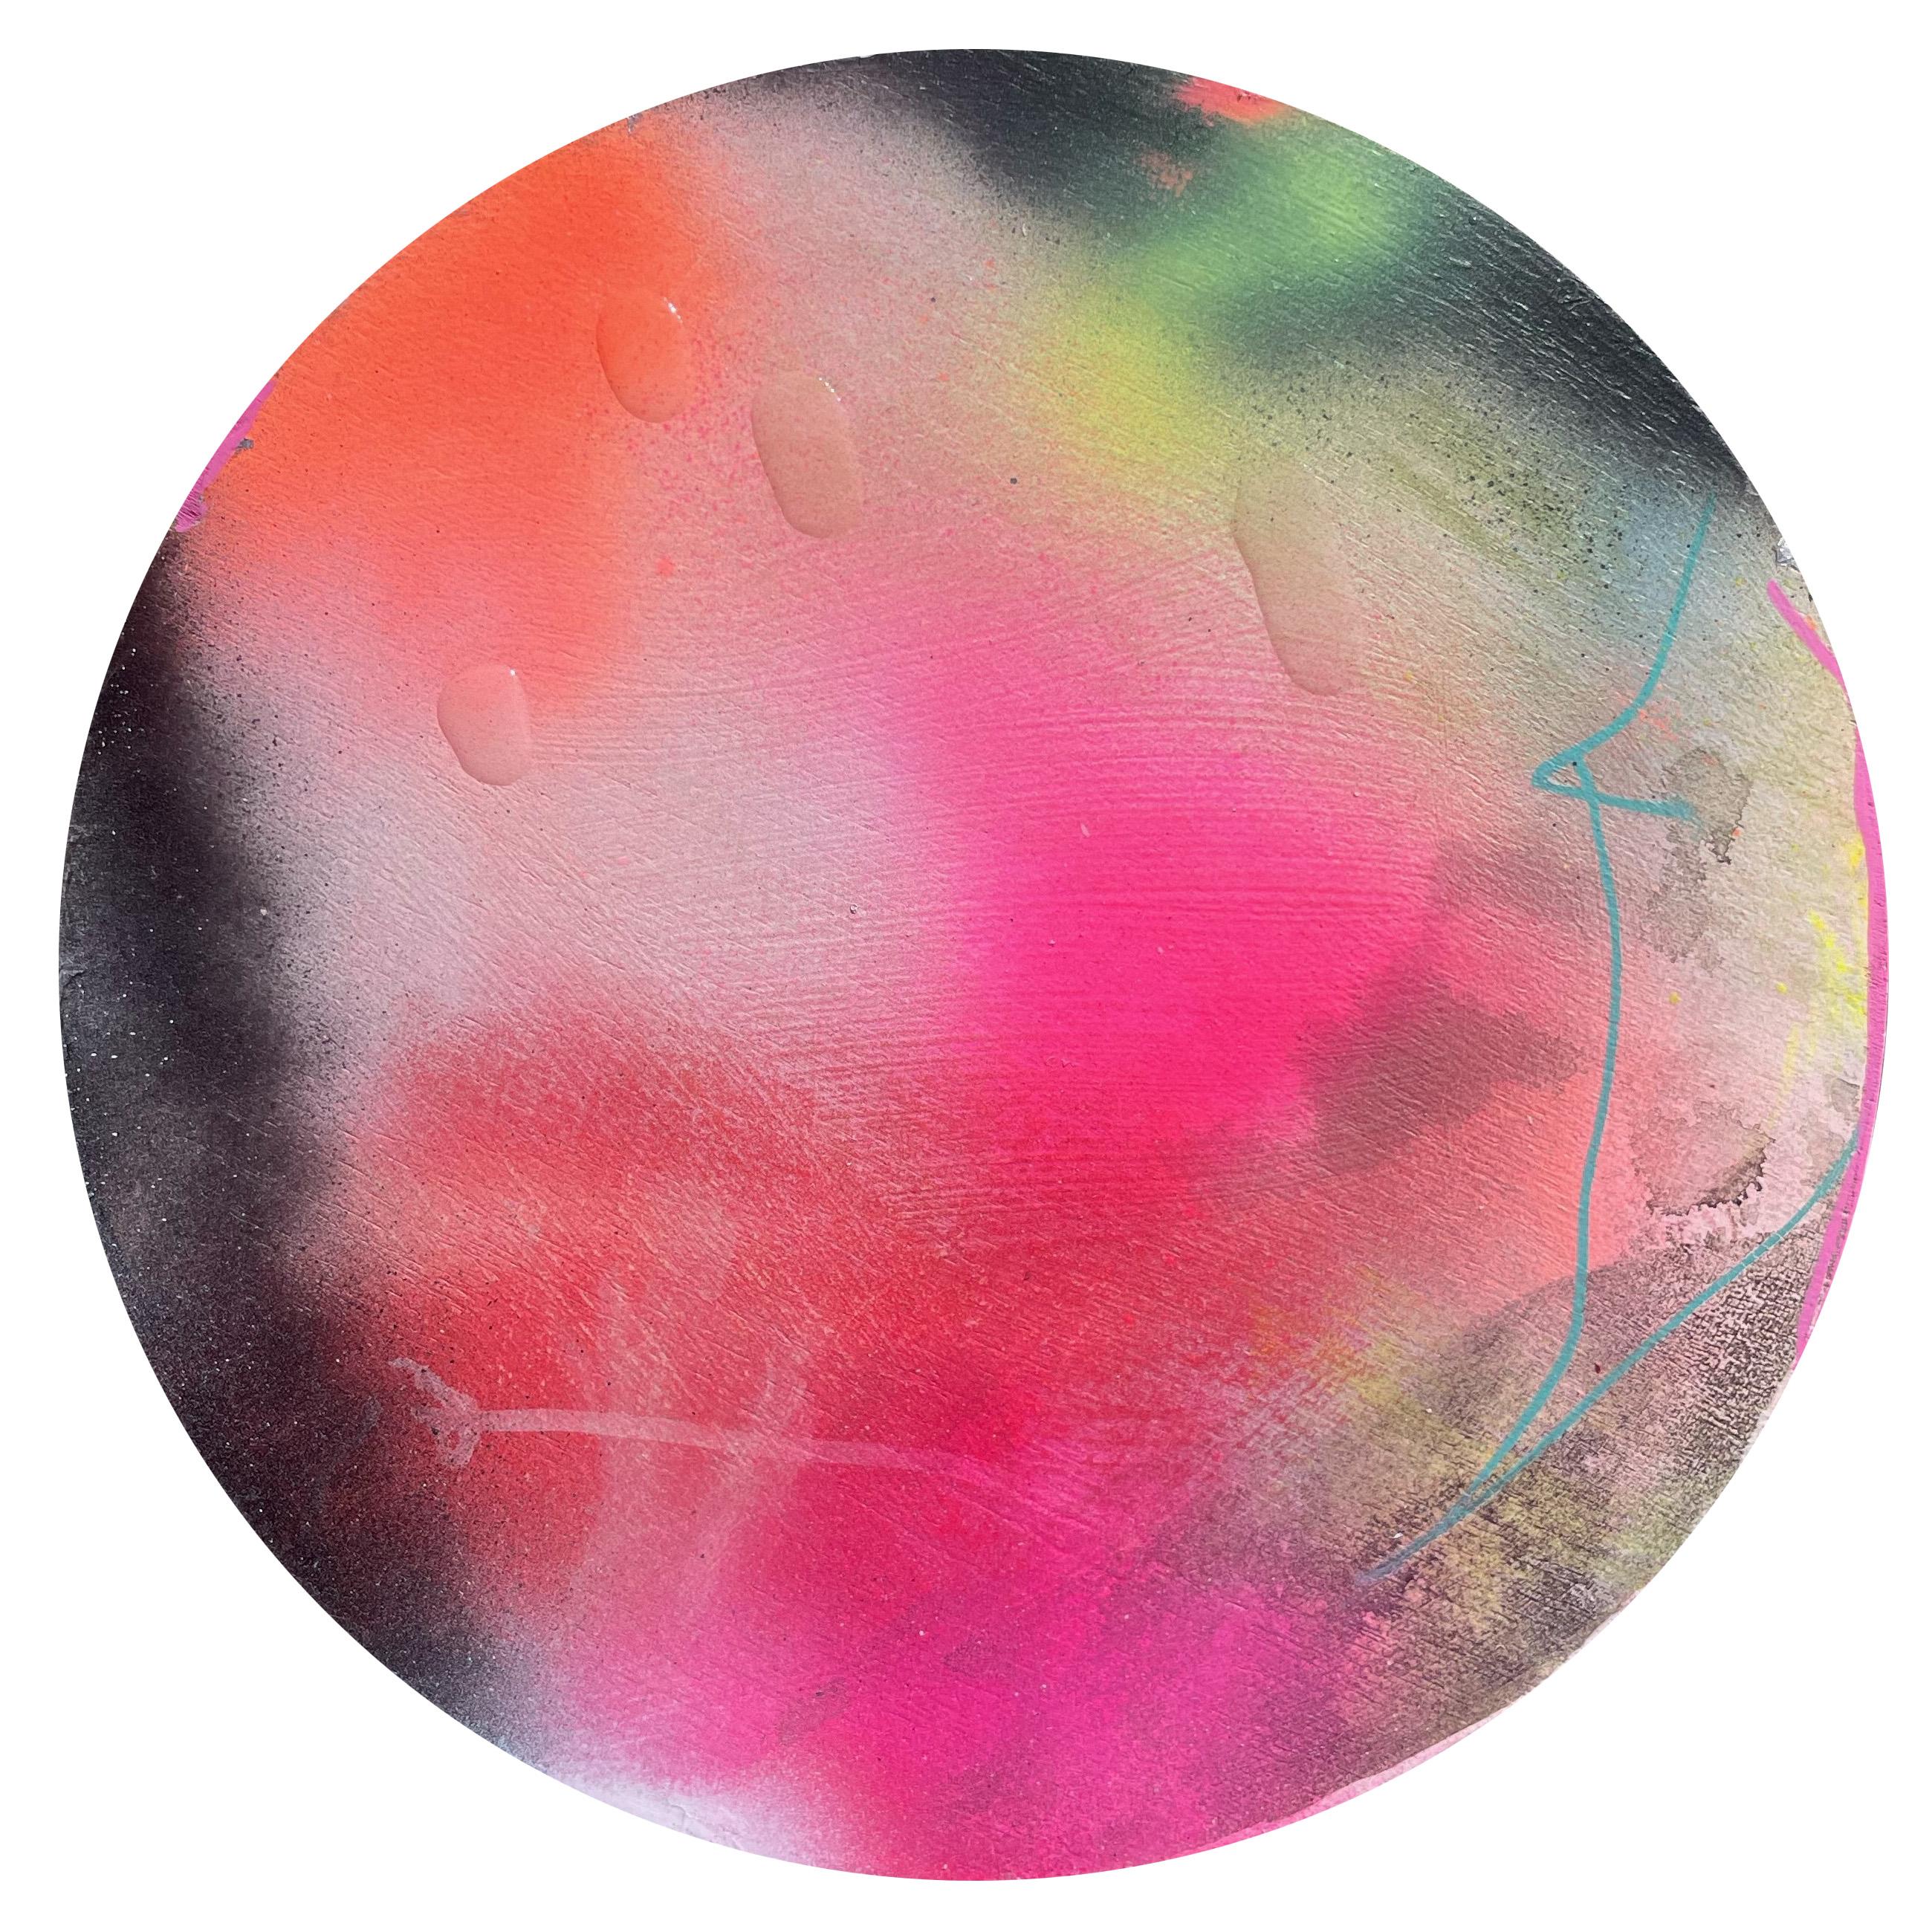 "Pearly Dewdrops 5" Contemporary Colorful Abstract Circular Painting - Mixed Media Art by David Hardaker